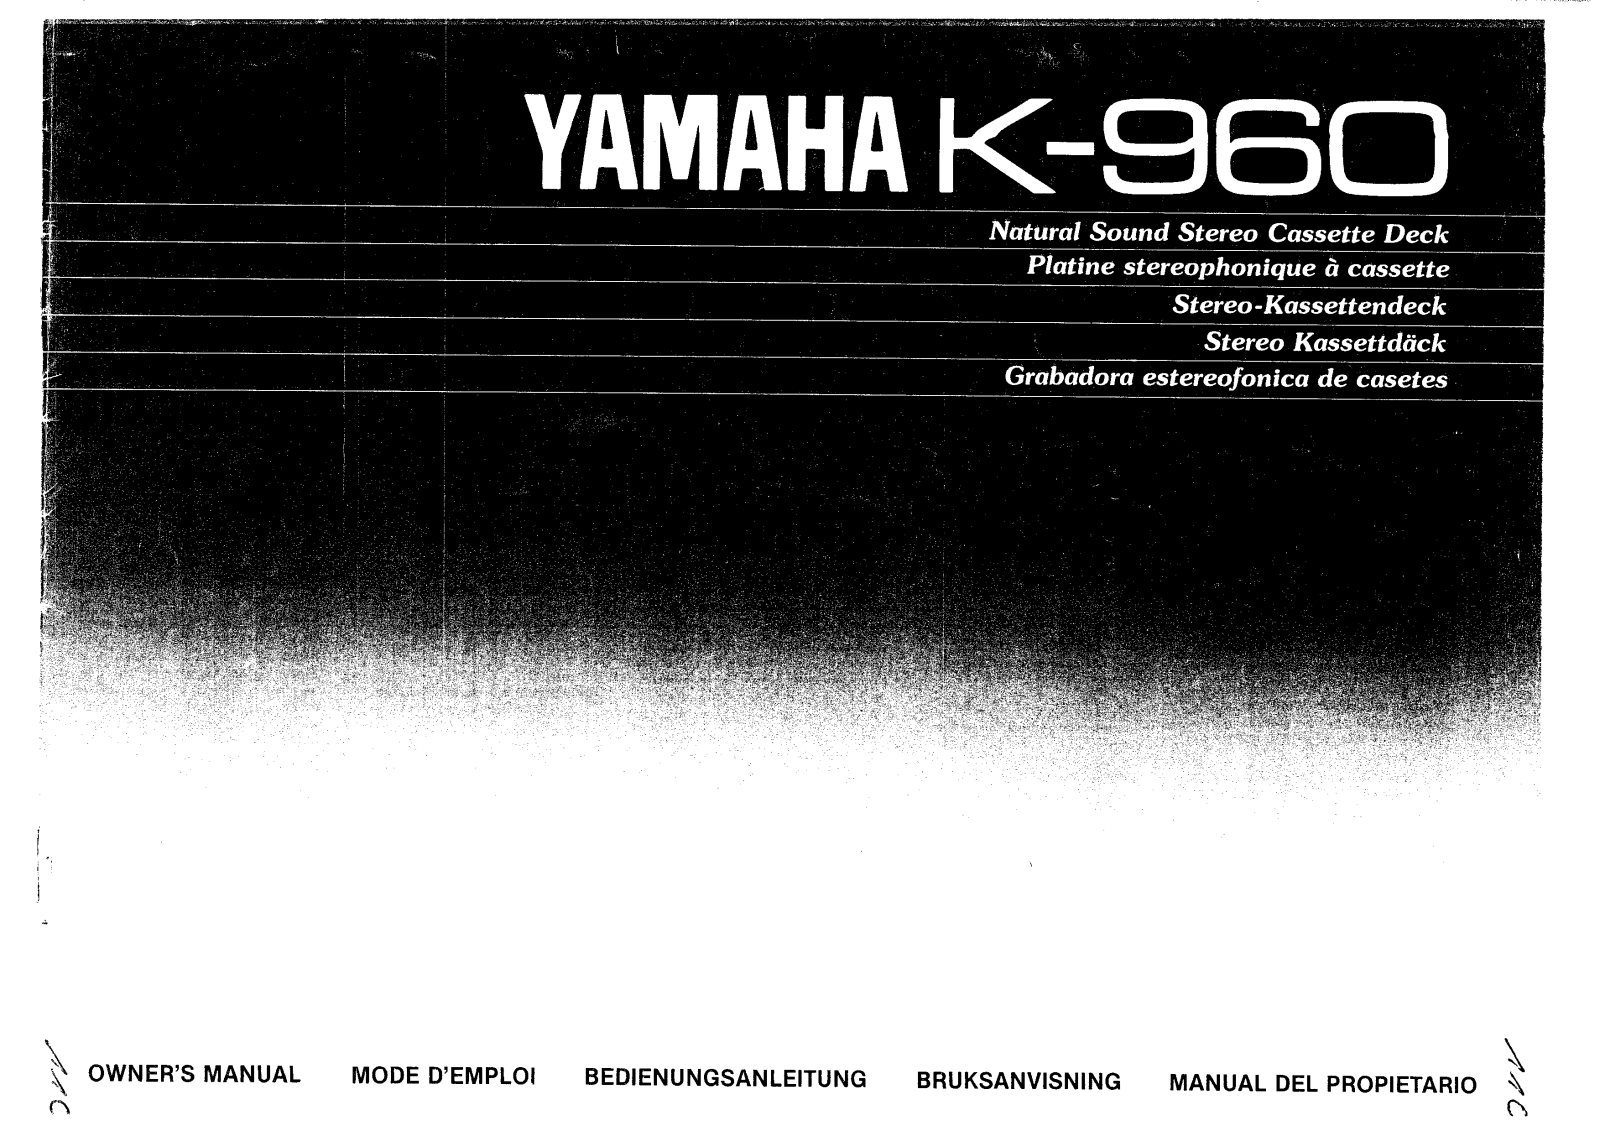 Yamaha K-960 Owners Manual